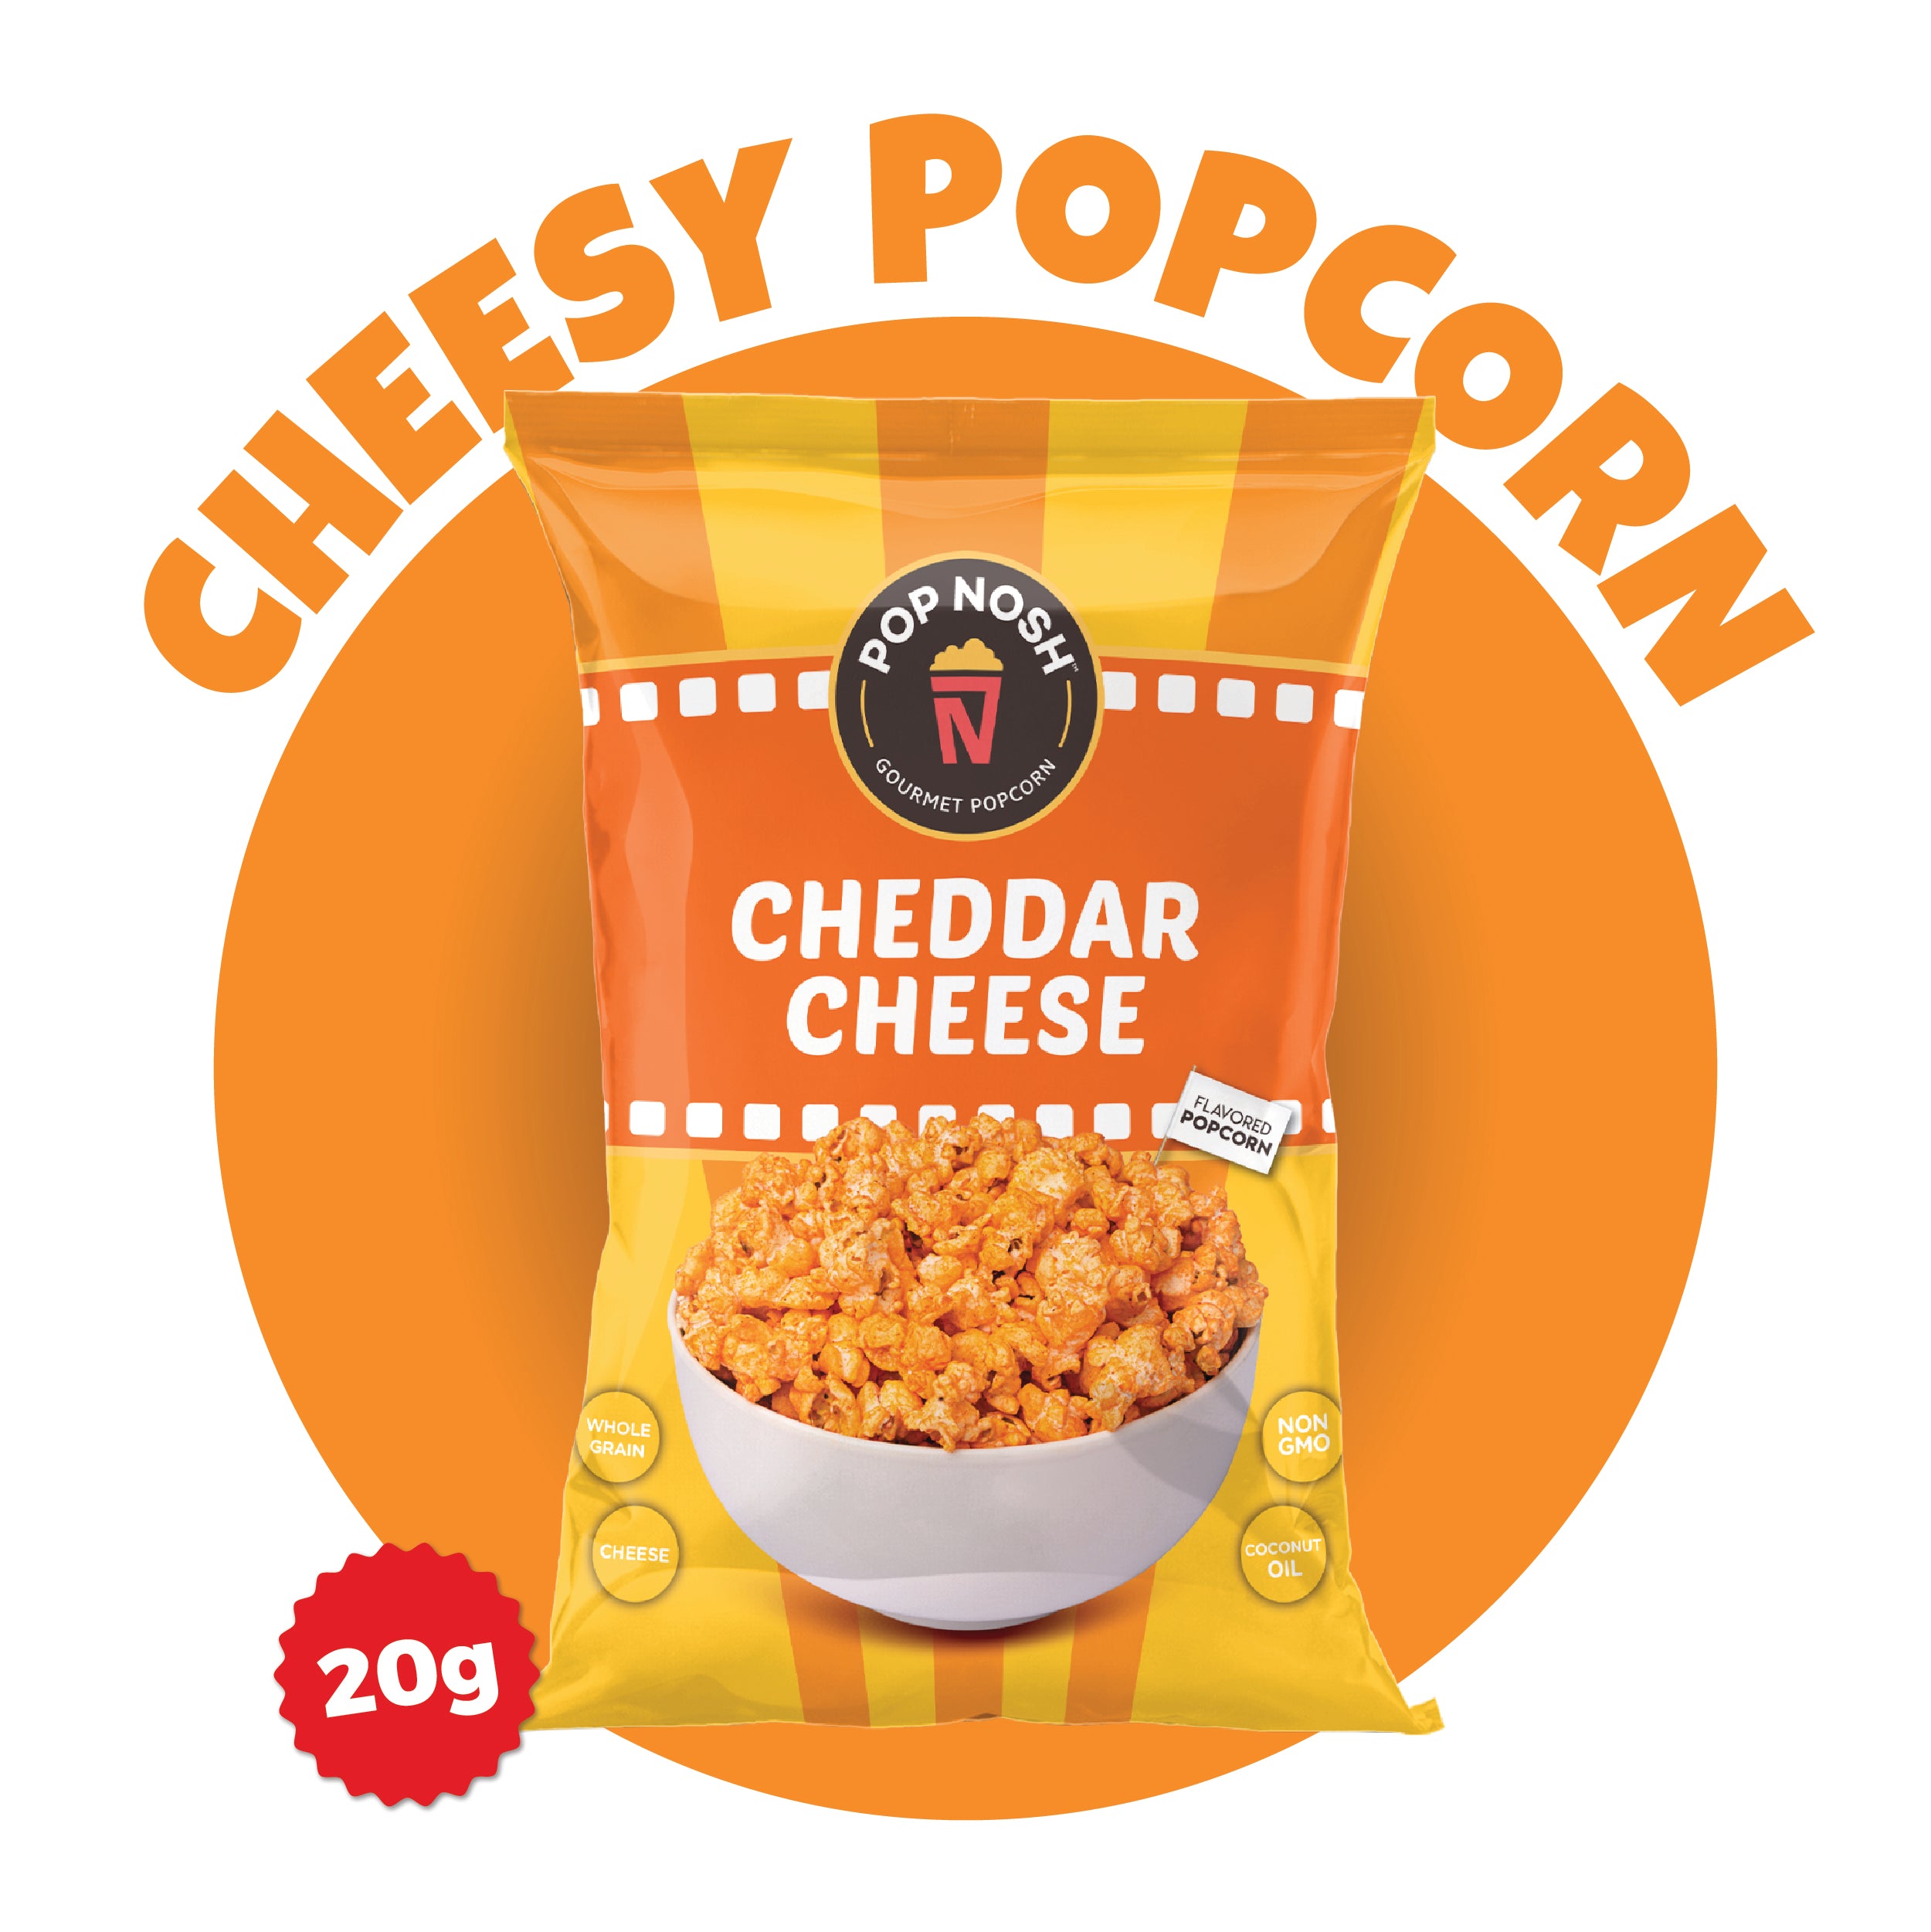 All Flavors Popcorn Sampler Box